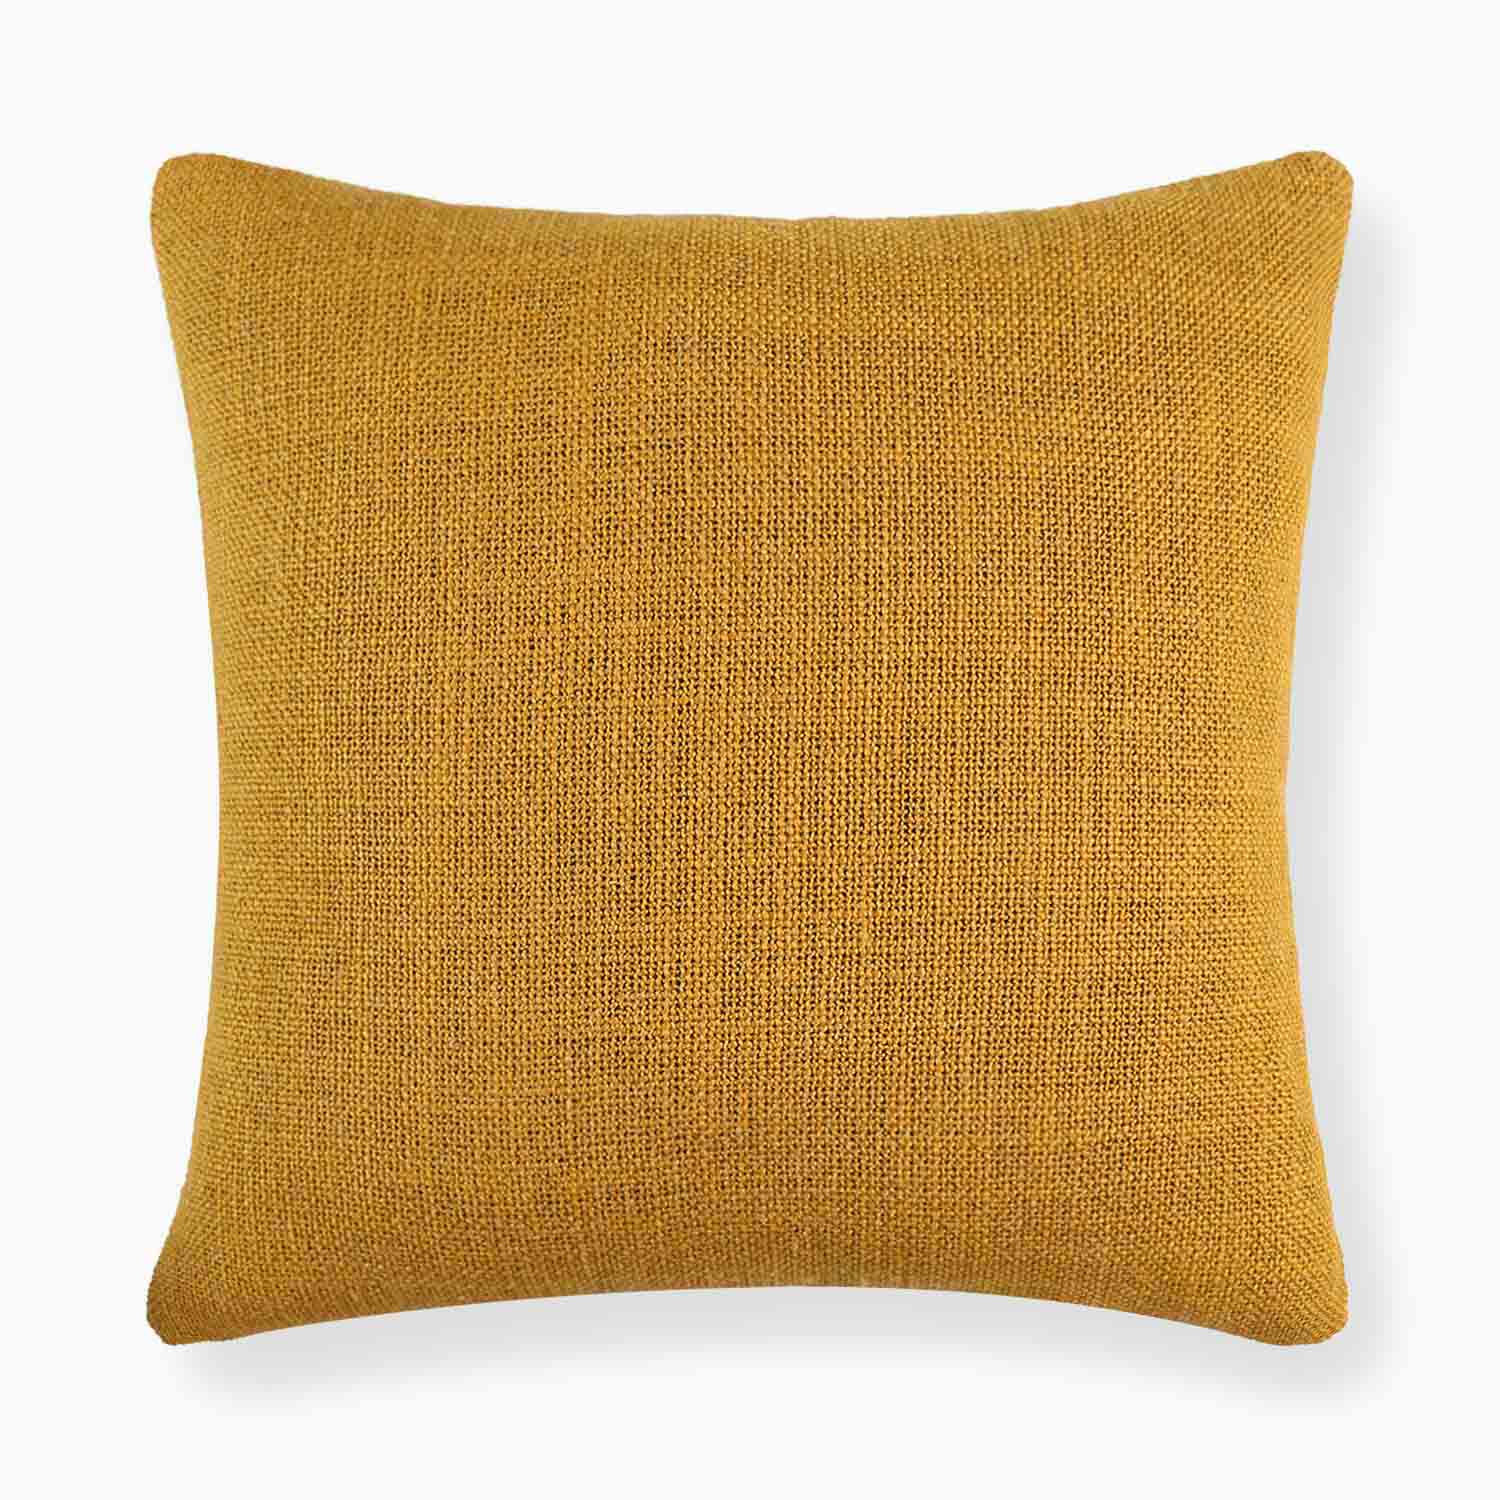 Savona Textured Linen Pillow Cover-Yellow Linen Decorative Pillow Cover